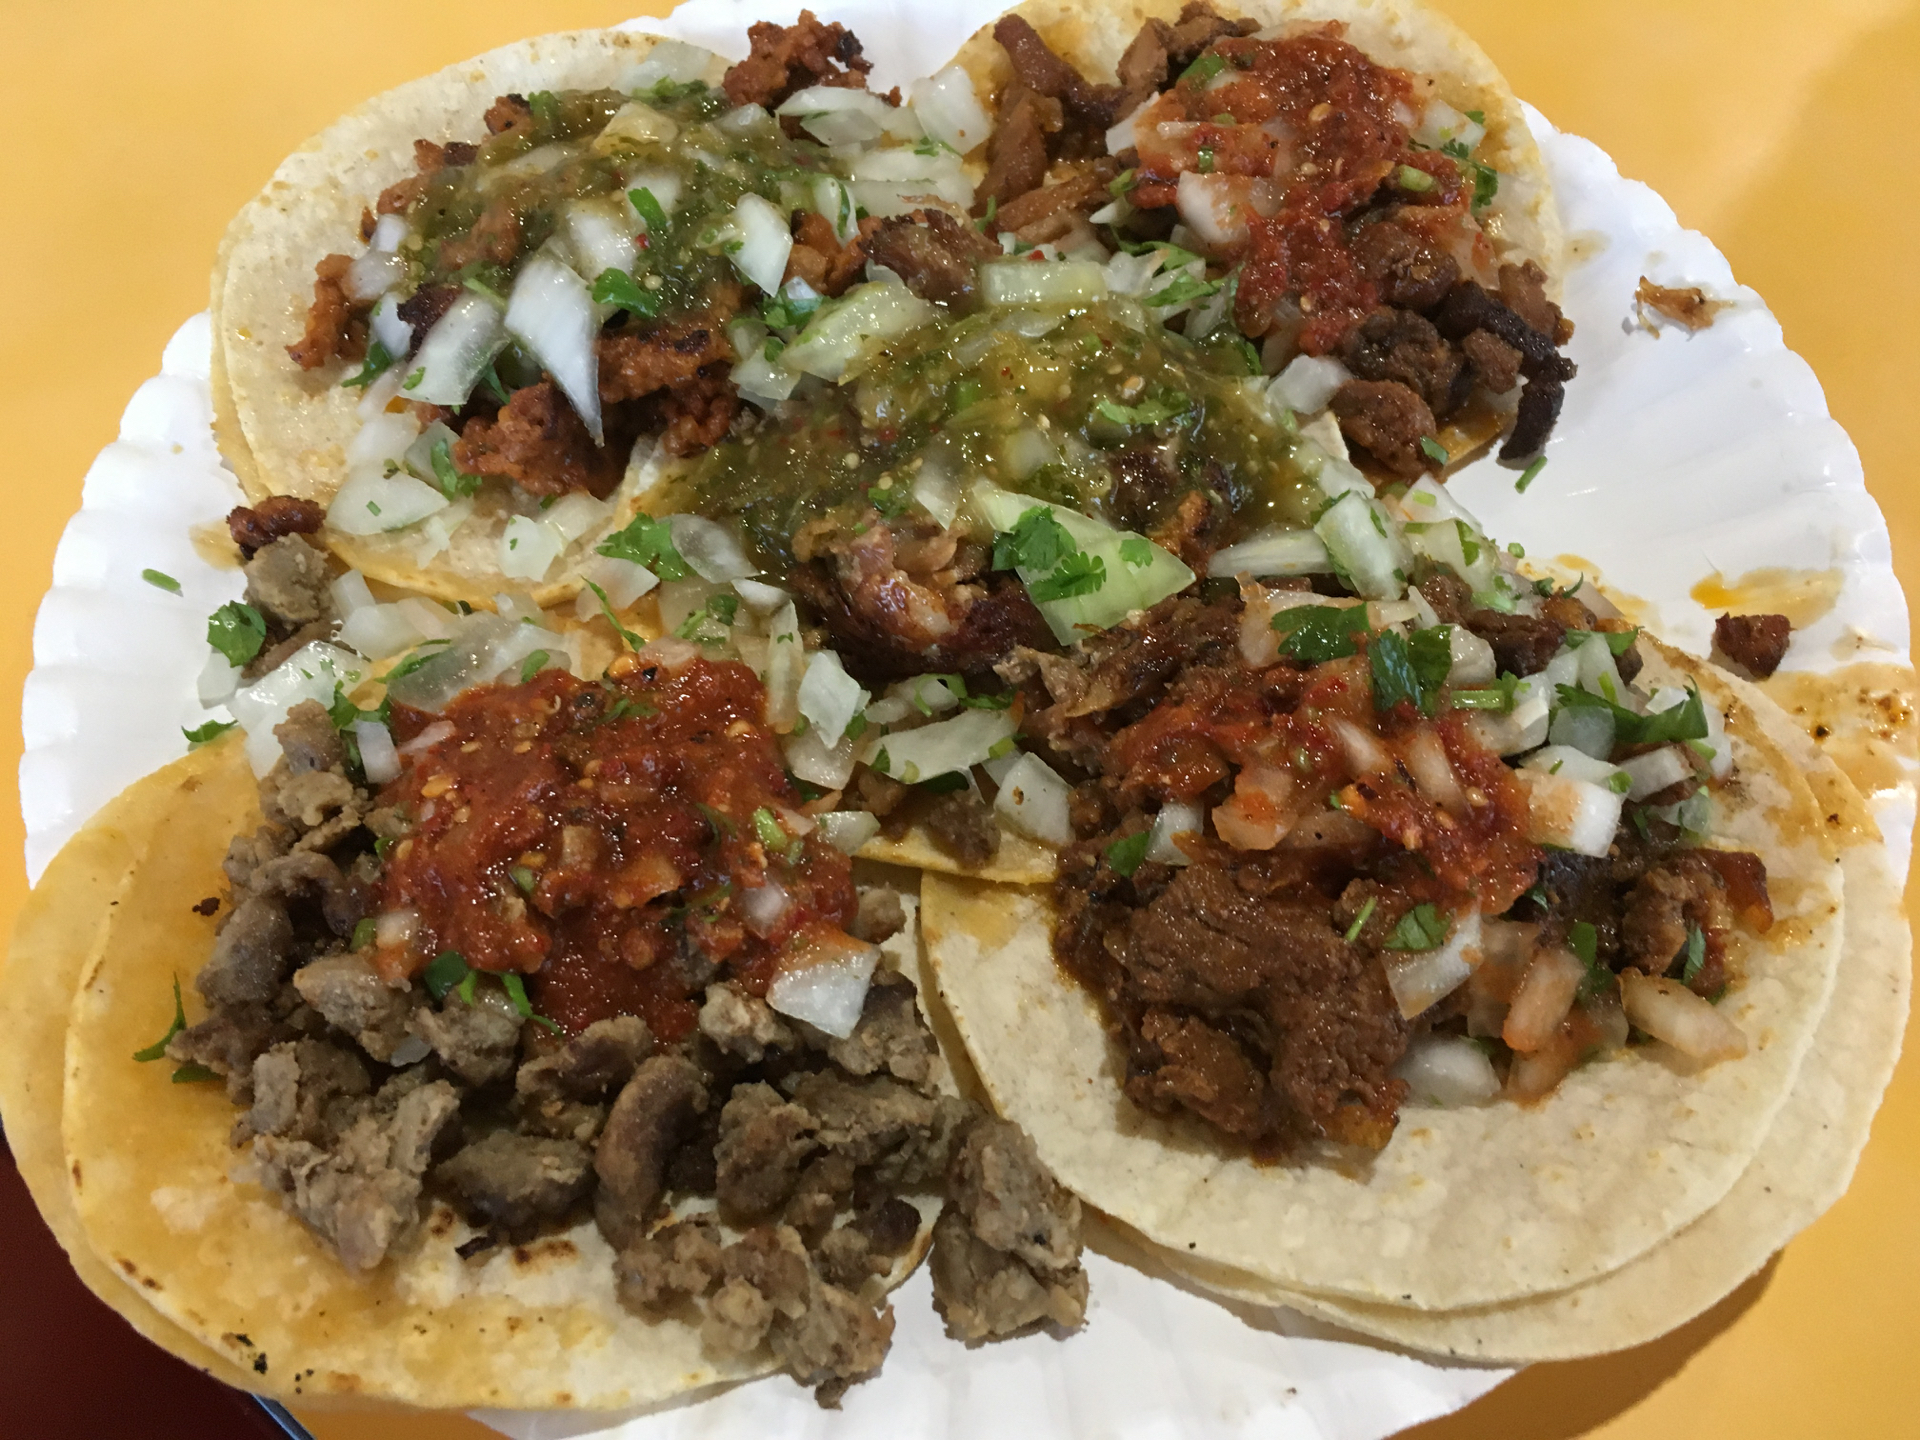 A plate of street tacos at El Grullense with carne asada, al pastor, chorizo, and carnitas.